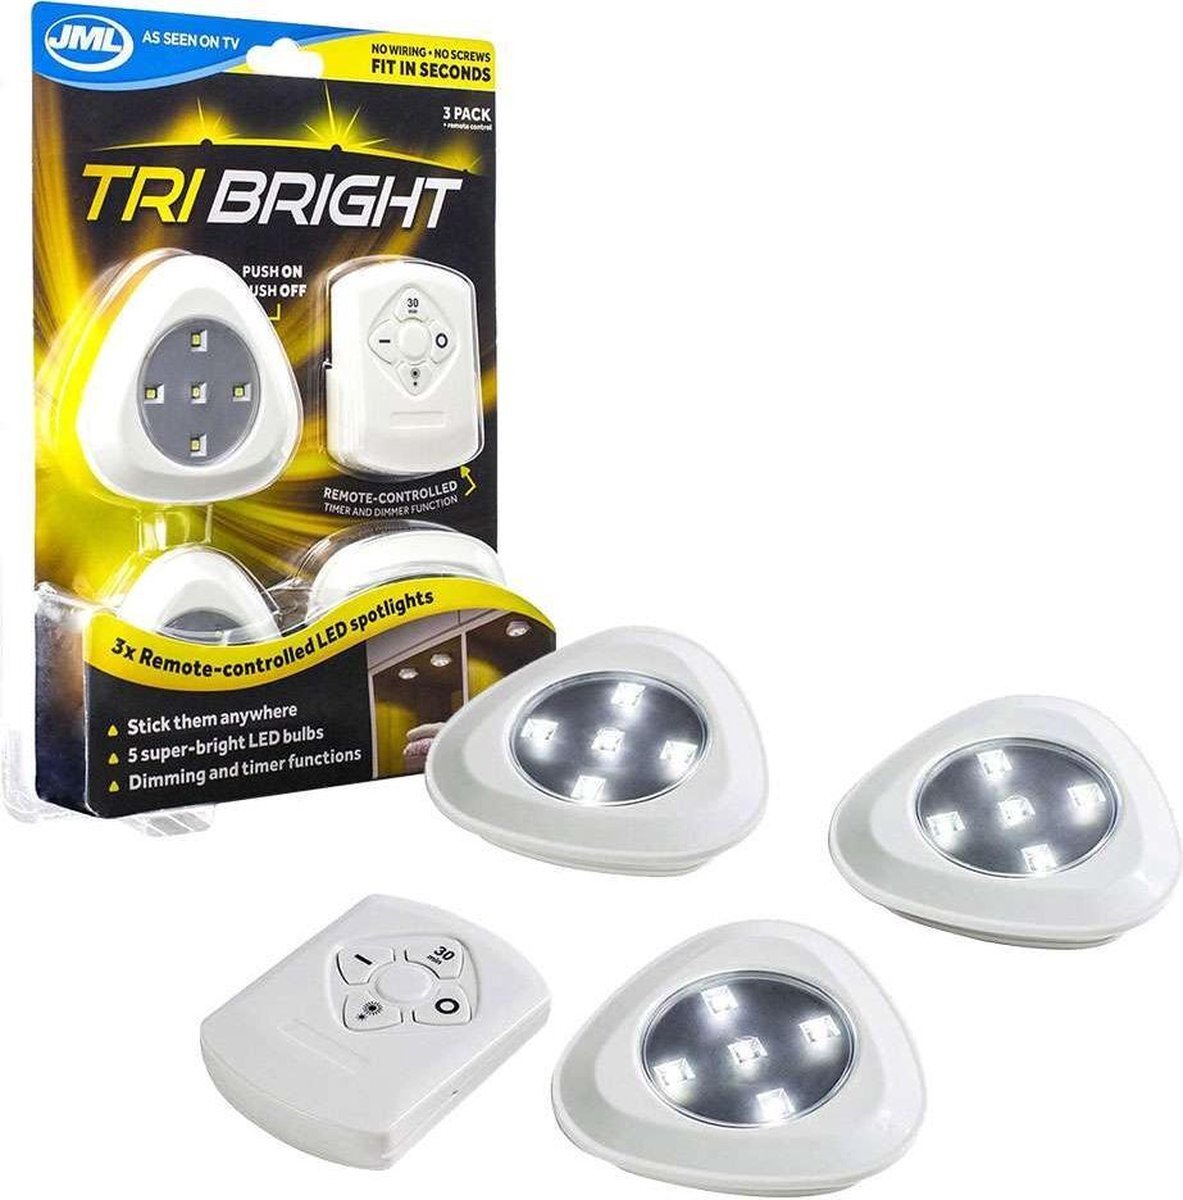 tri bright Trig-Bright - Draadloze Witte LED lampen set incl. afstandsbediening (4-delig) Bekend van TV